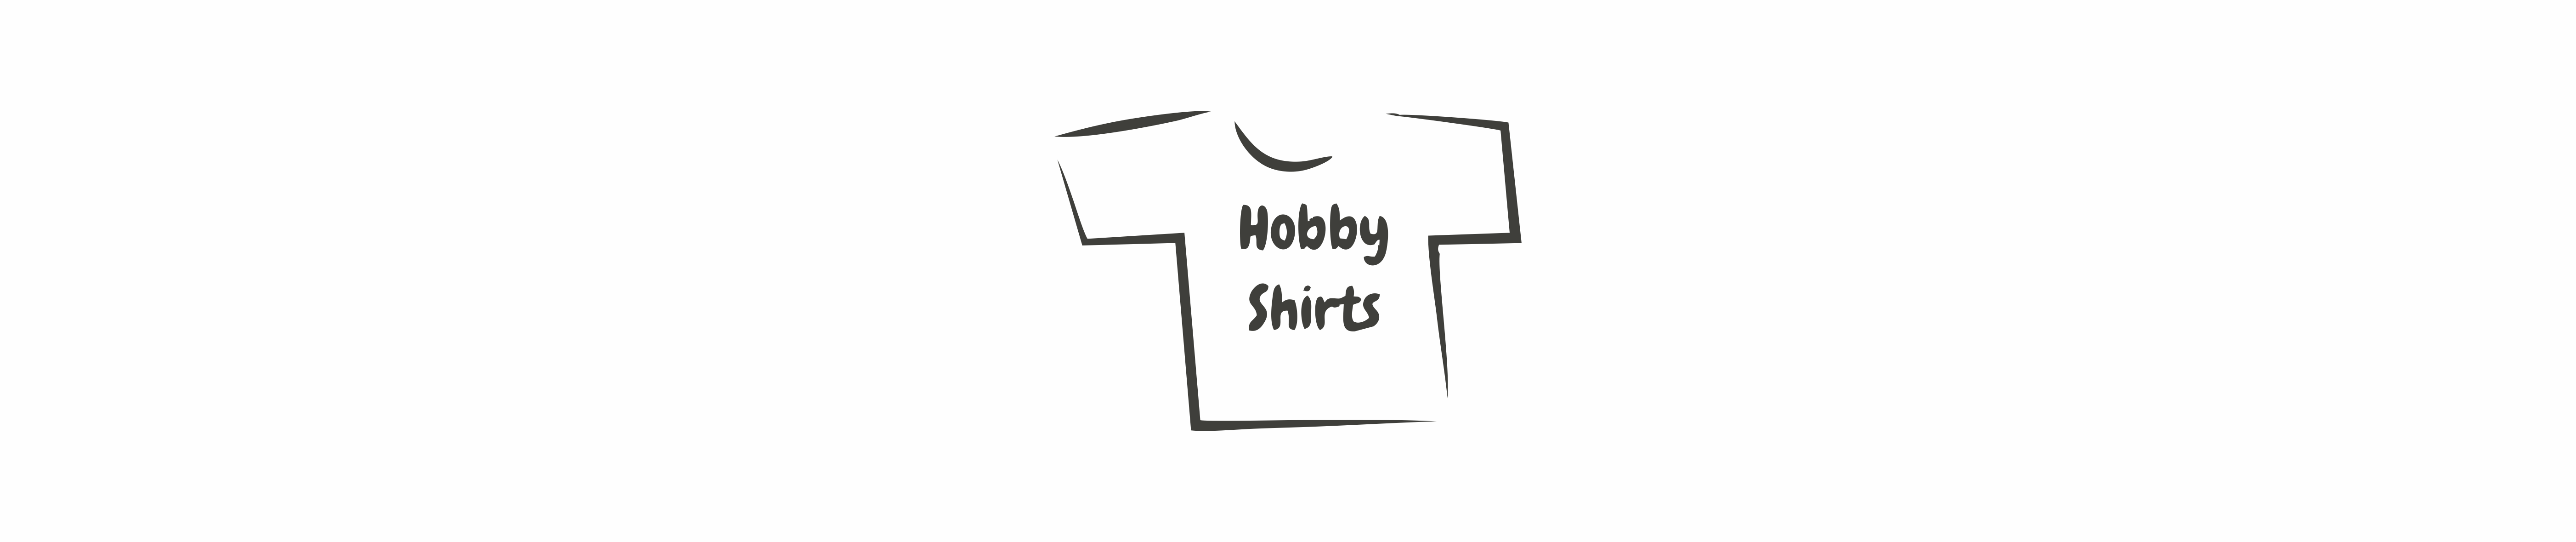 HobbyShirts